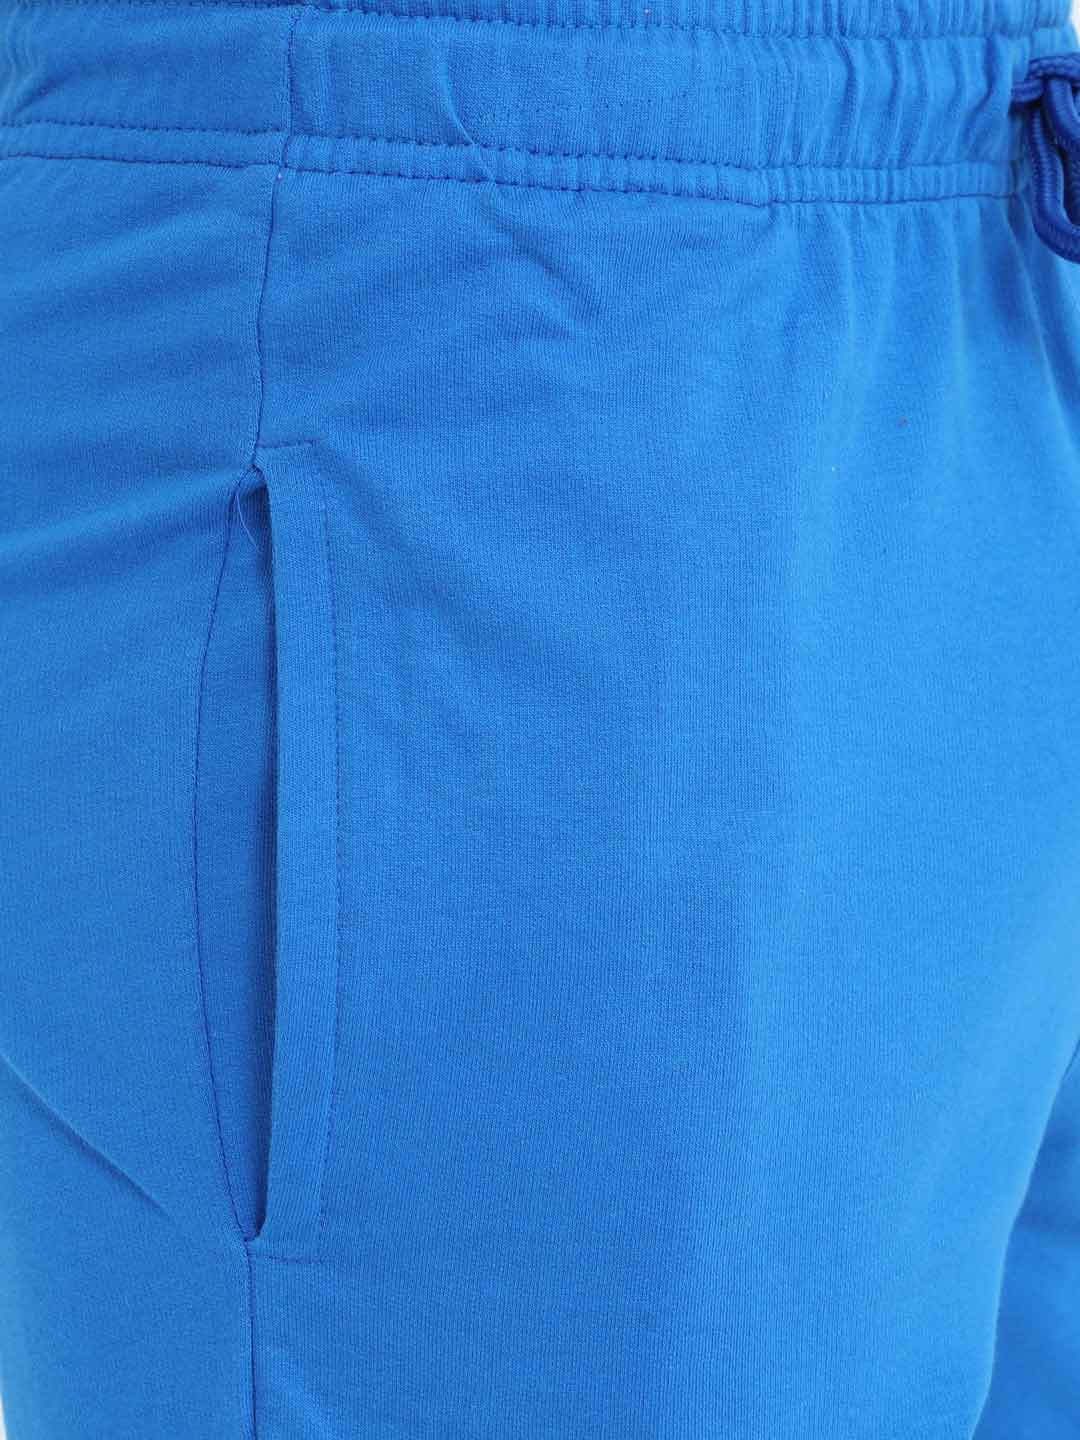 The Cobalt Blue Everywear Shorts